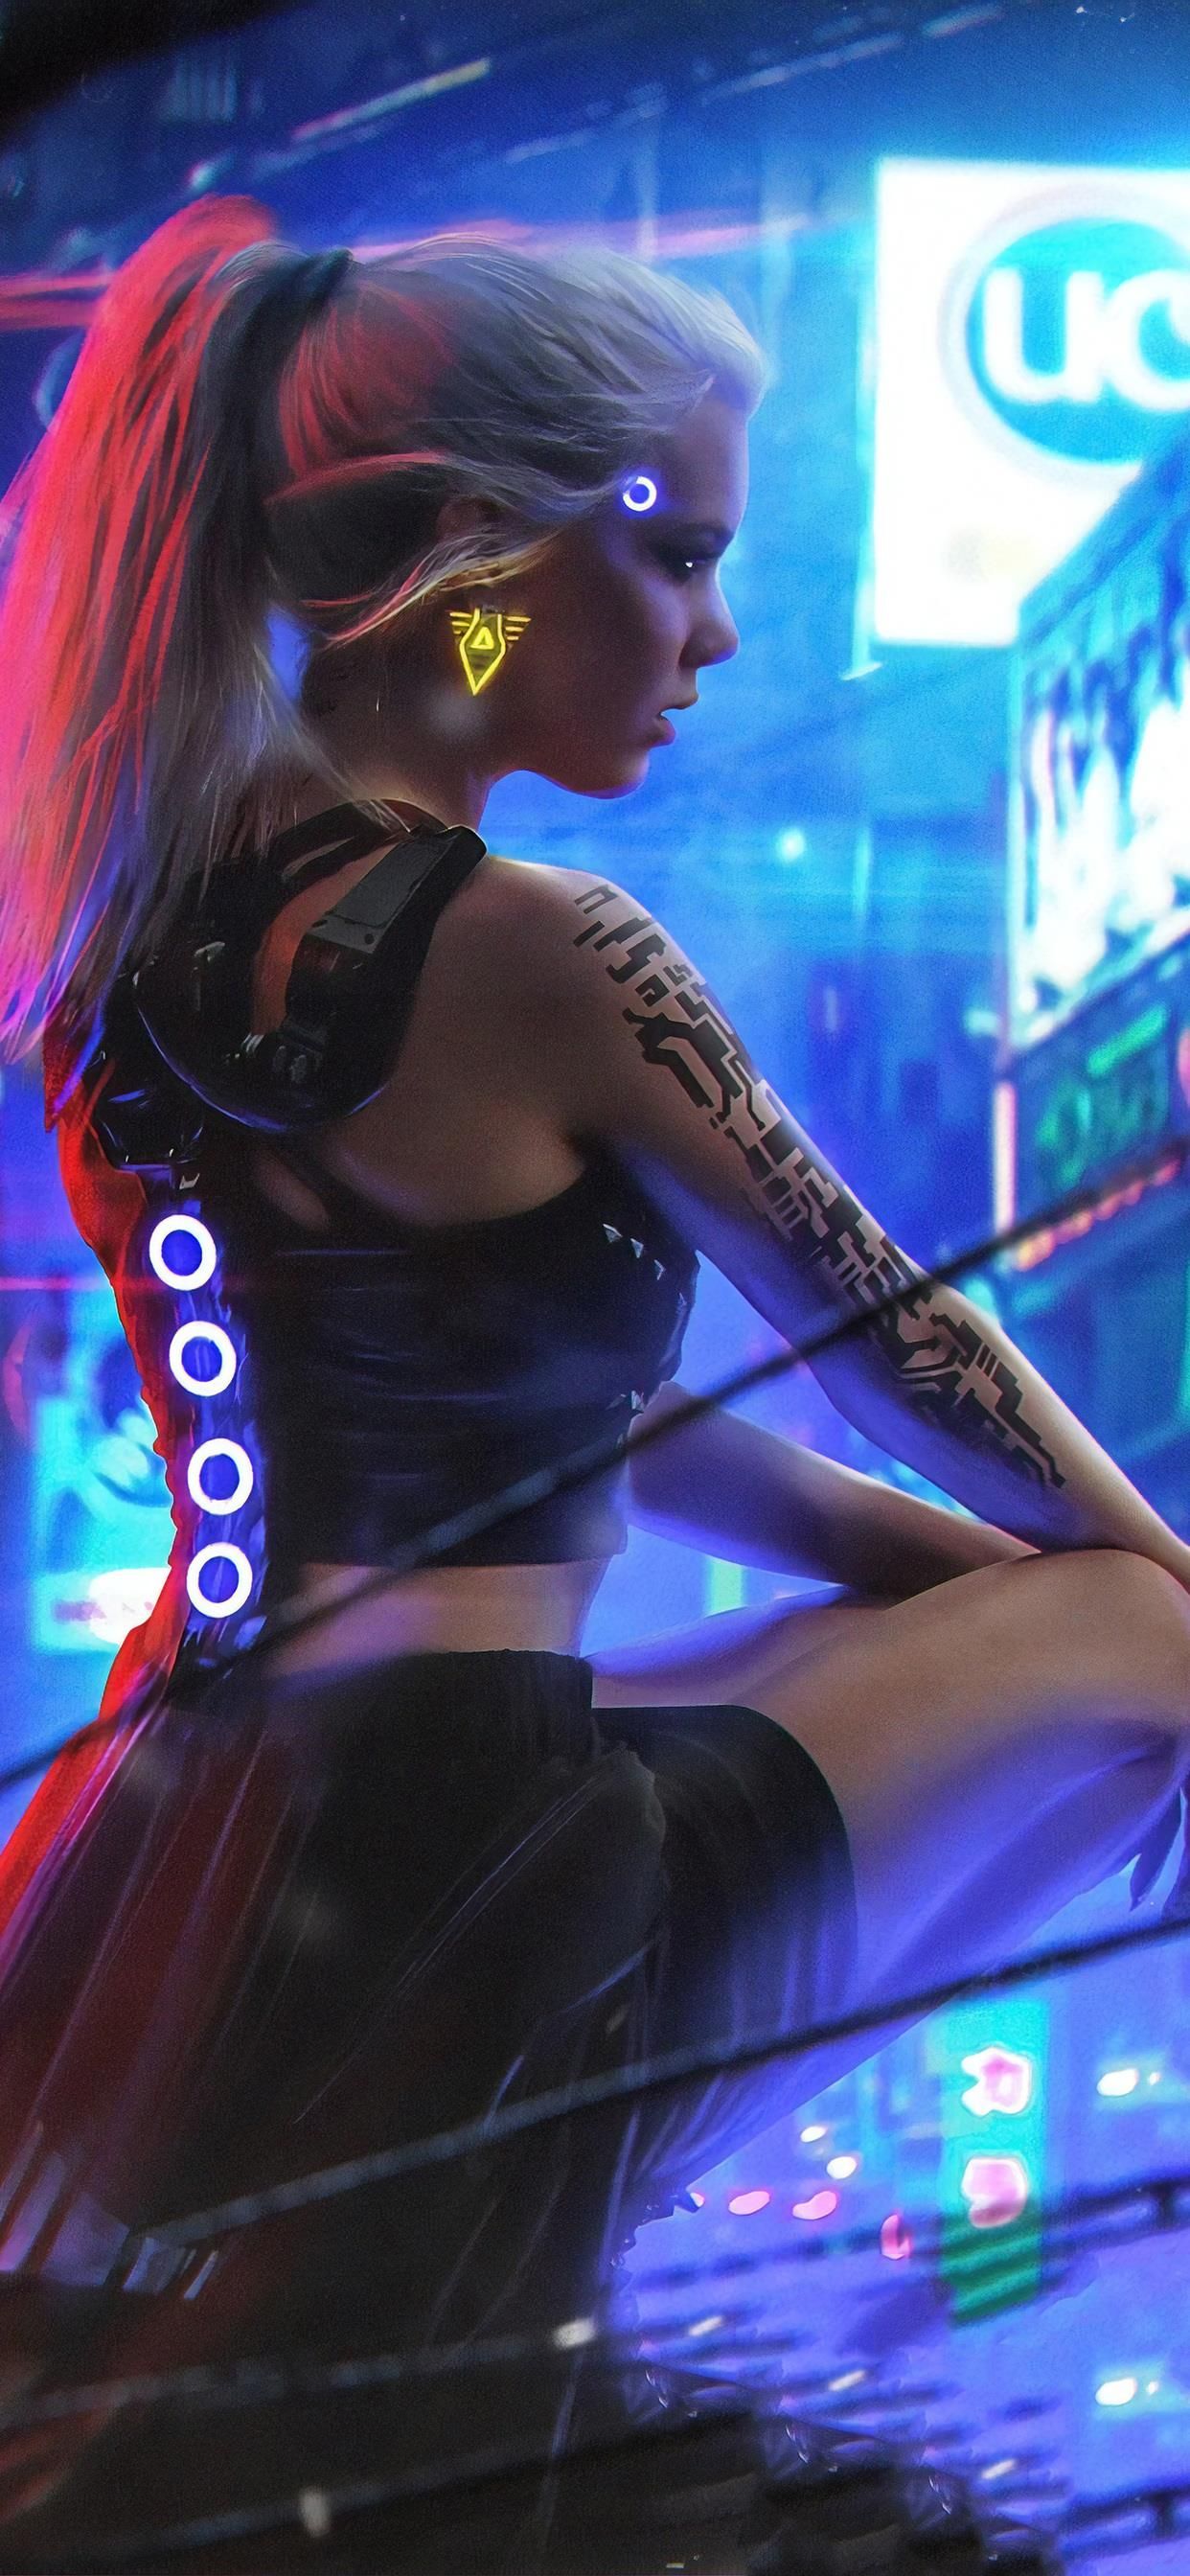 cyberpunk neon girl 4k iPhone X Wallpapers Free Download